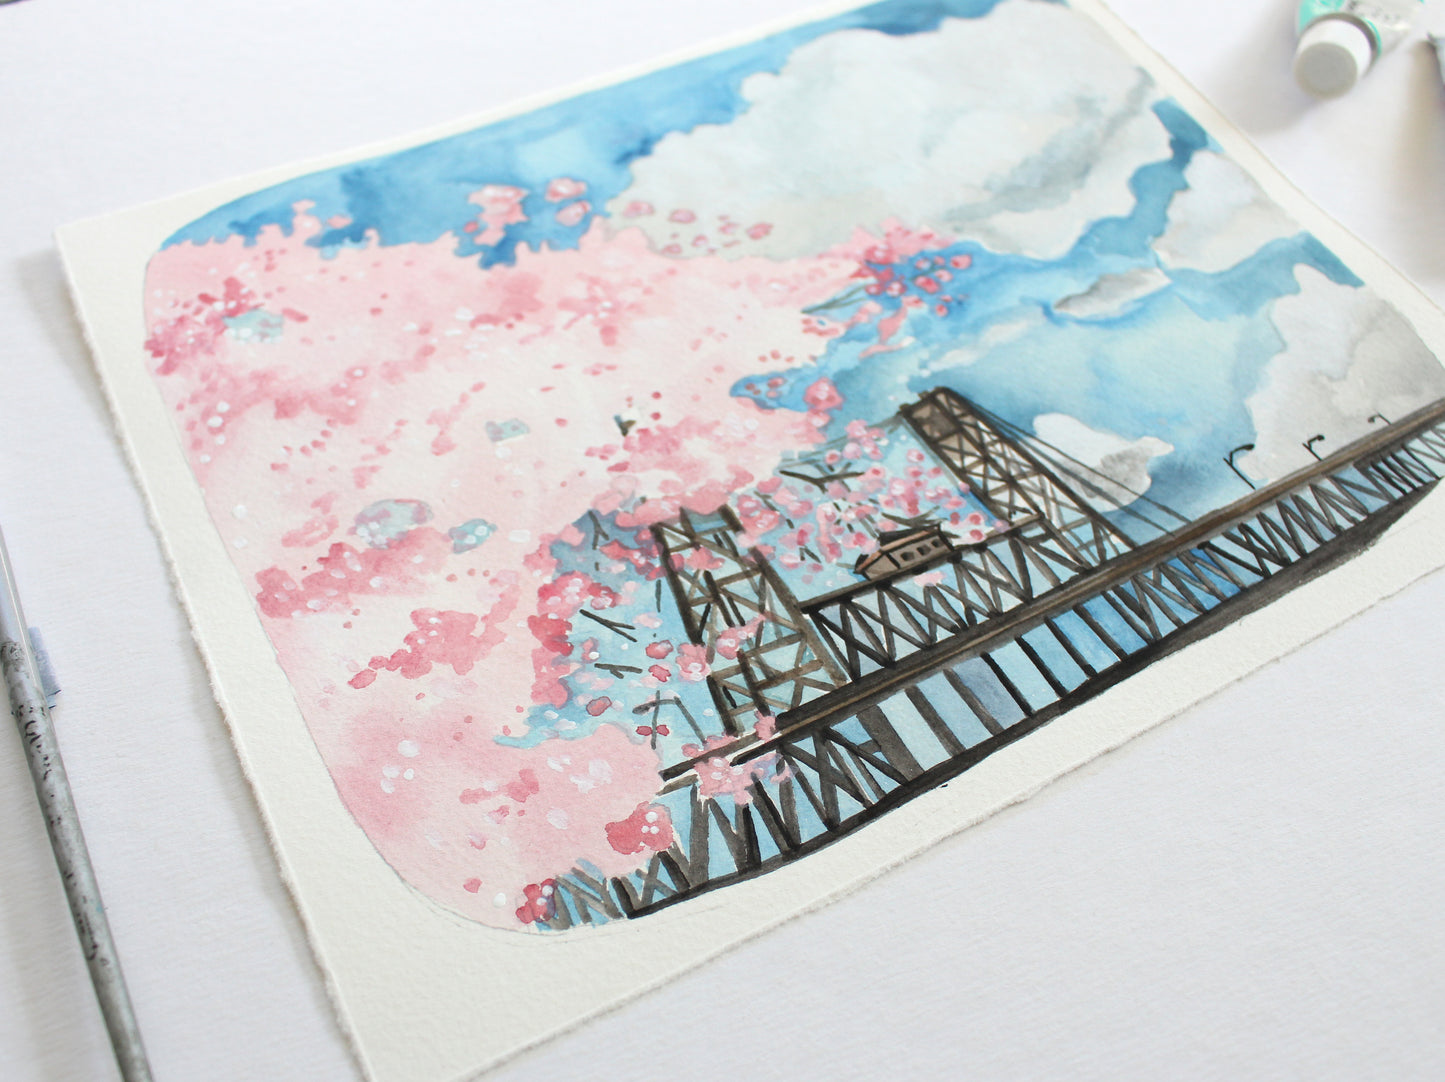 Original Painting - Steel Bridge with Cherry Blossoms